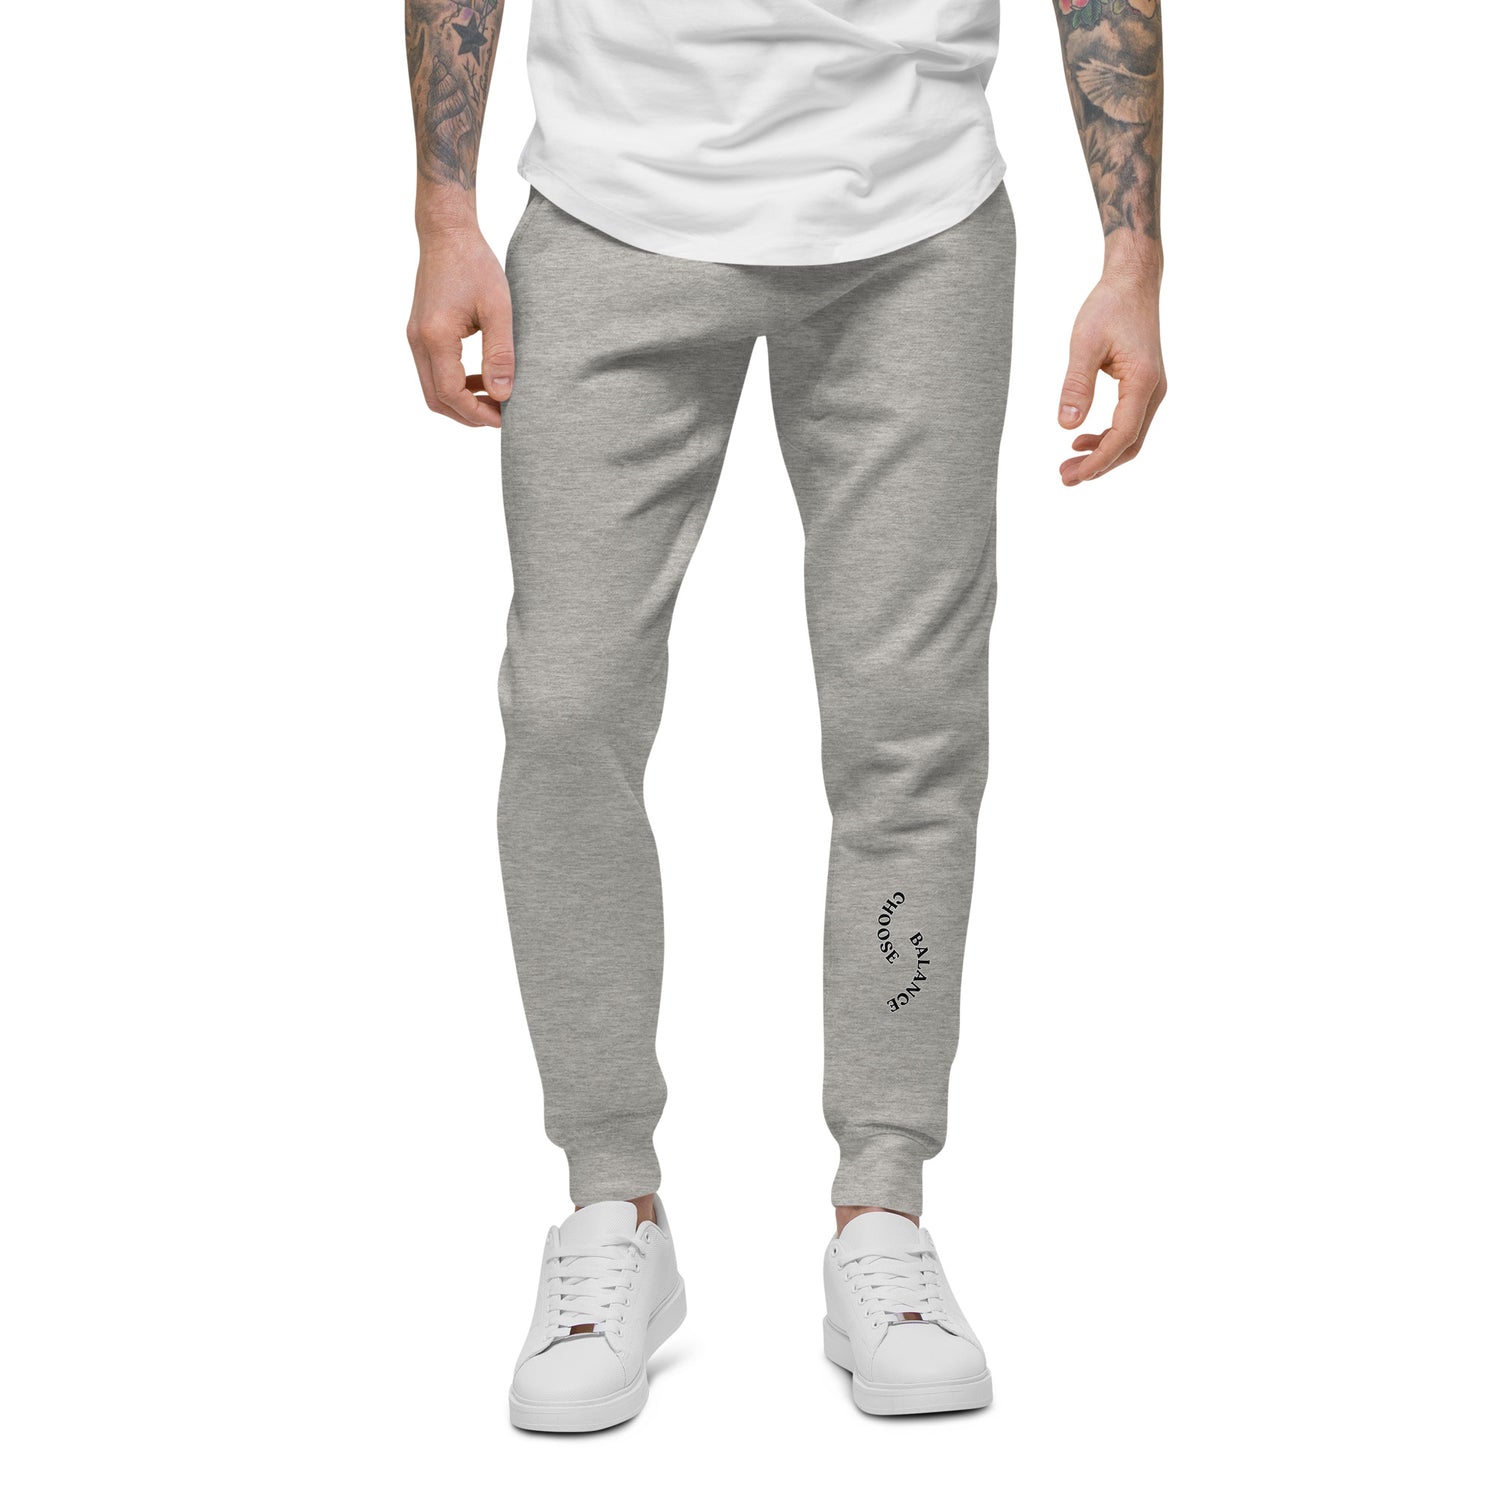 Closeup of Grey Sweat pant with "Choose Balance" printed on left lower leg.